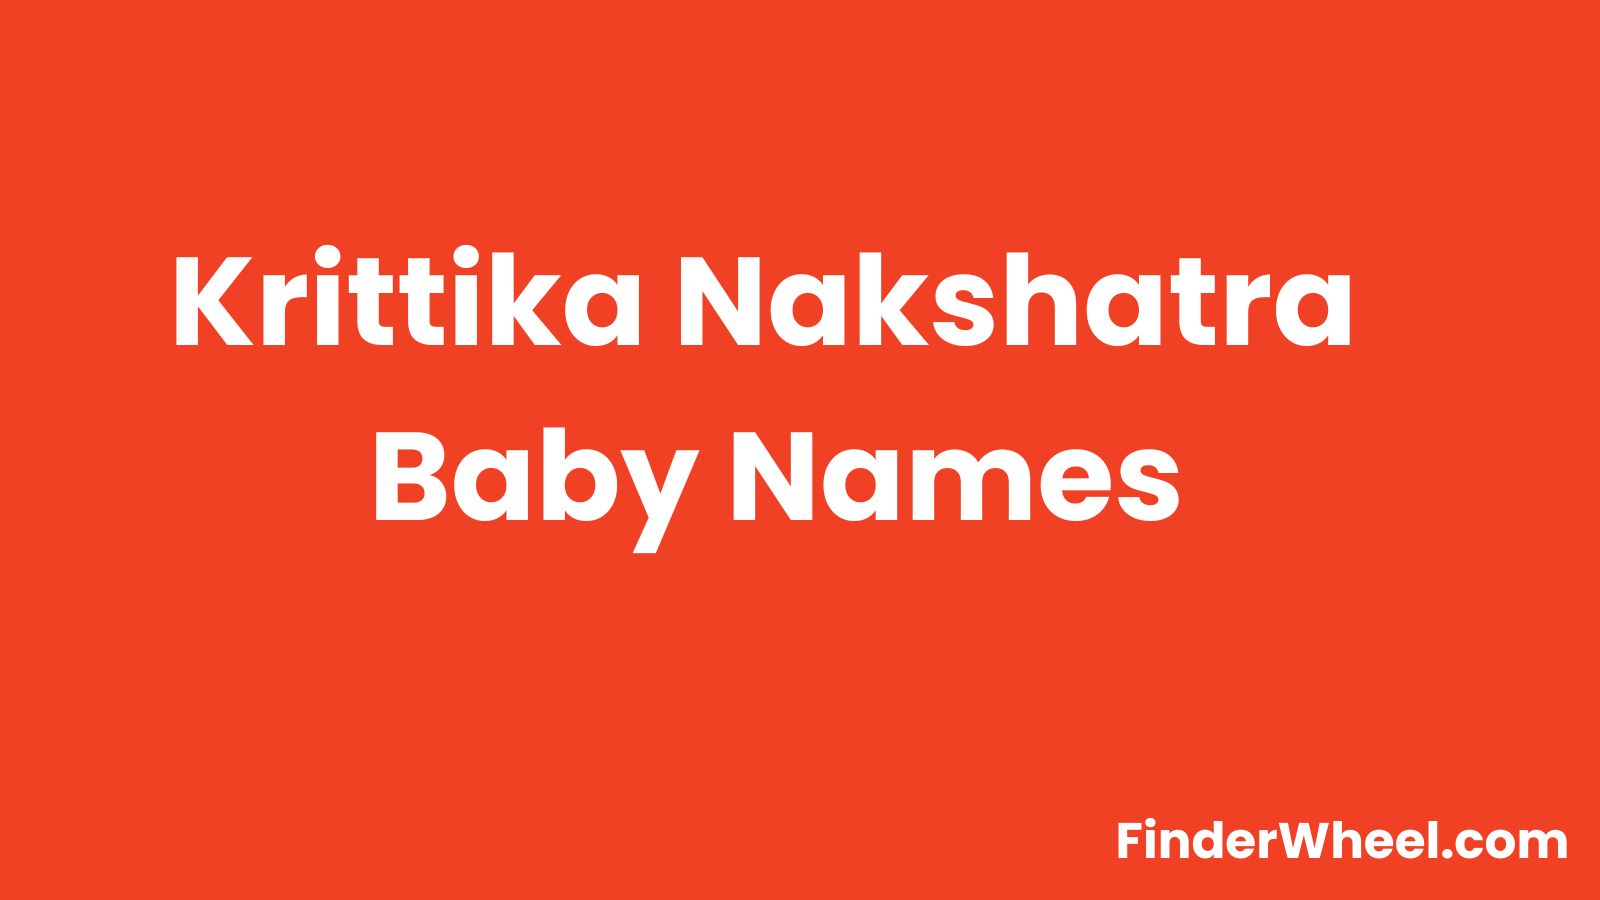 Krittika Nakshatra Baby Names